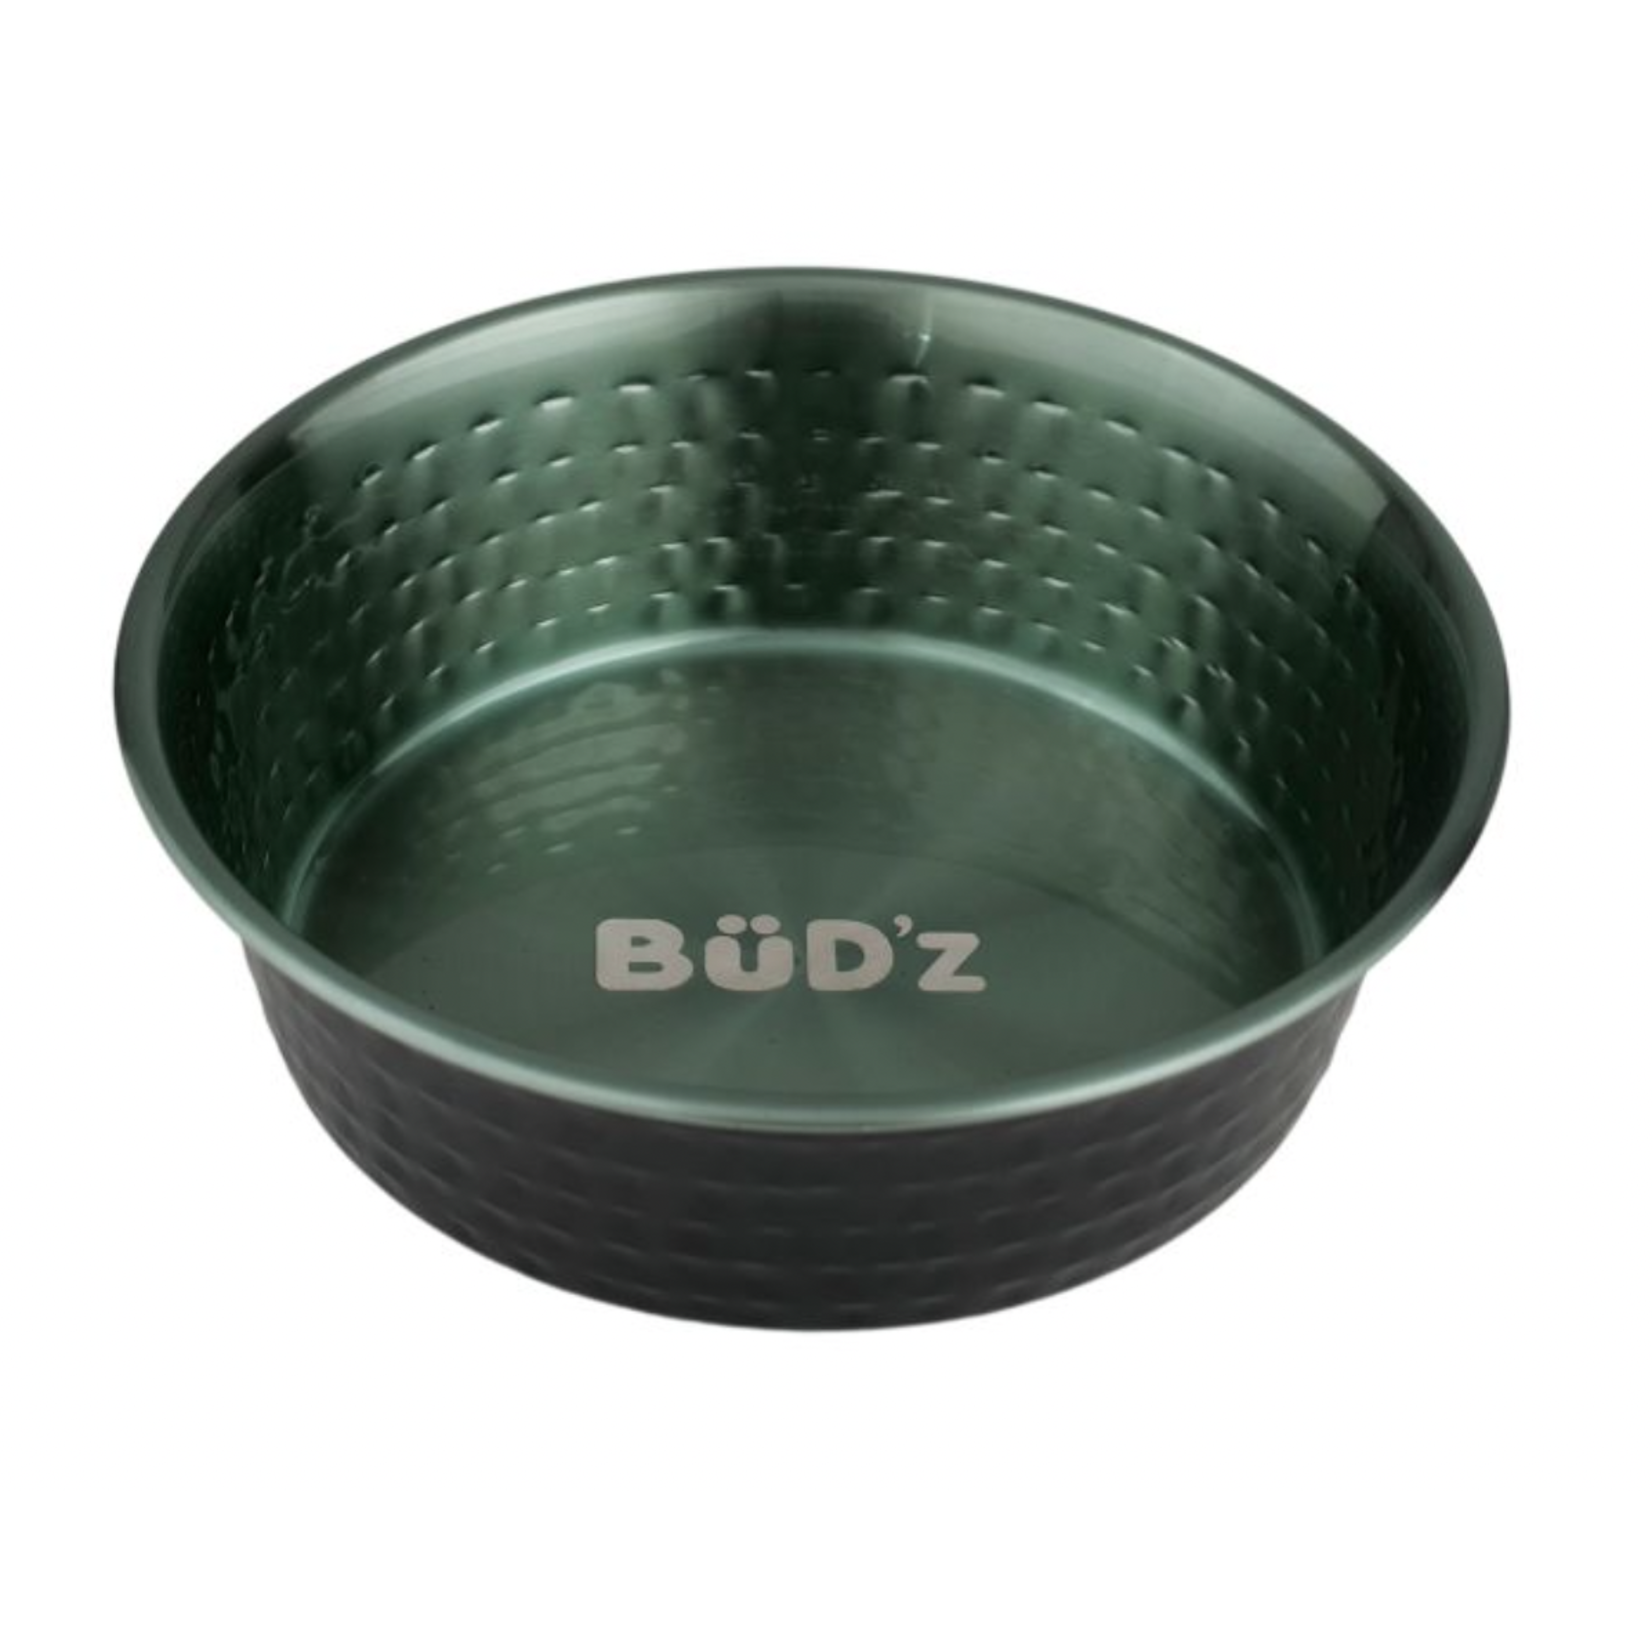 BUD-Z BUD'Z STAINLESS STEEL BOWL, HAMMERED INTERIOR - GREEN 1900ml (64oz)